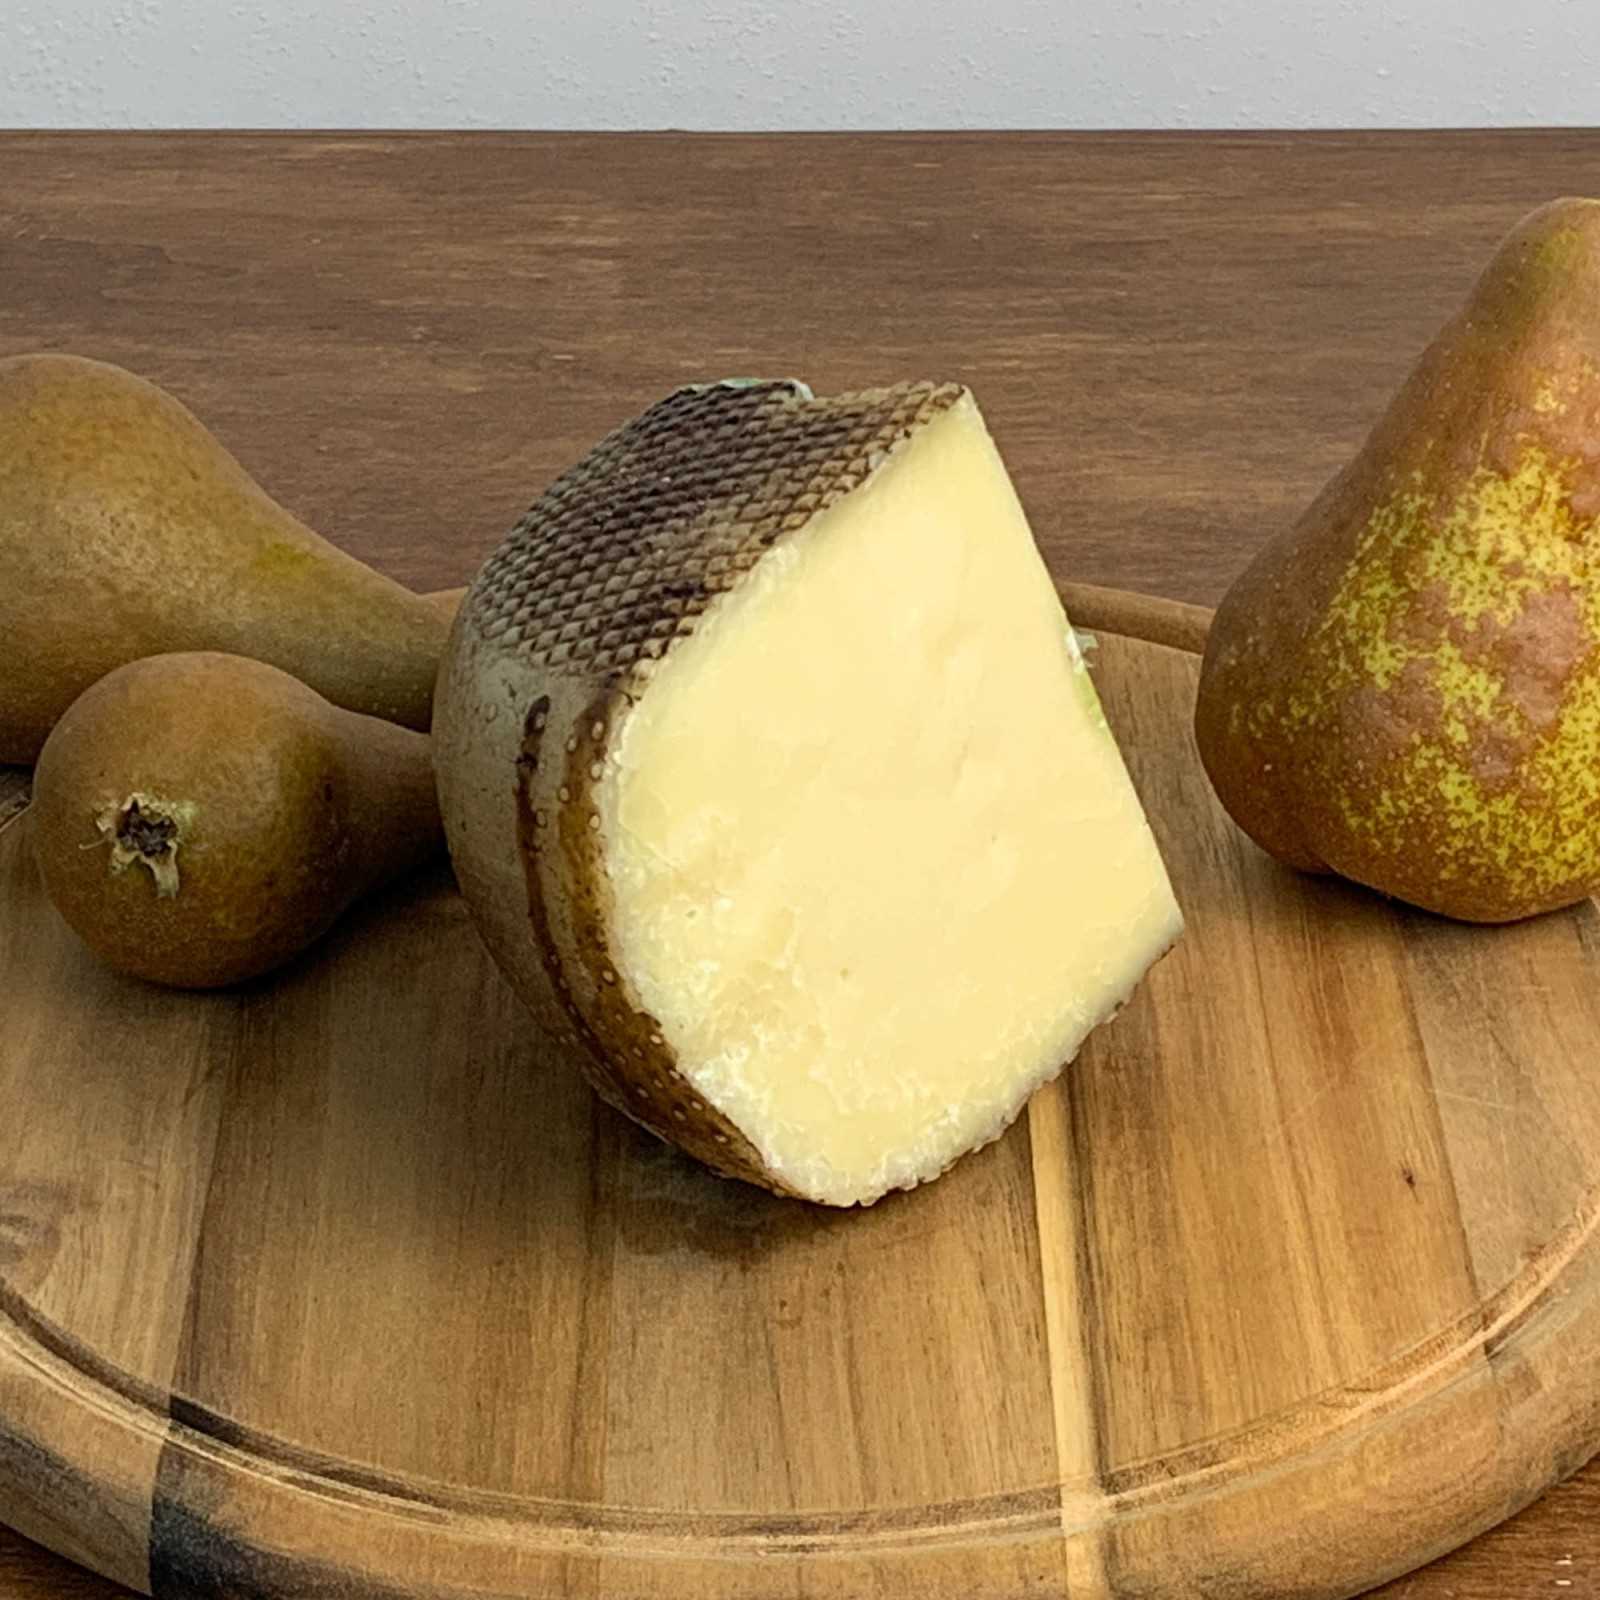 Pecorino Cheese With Pears.